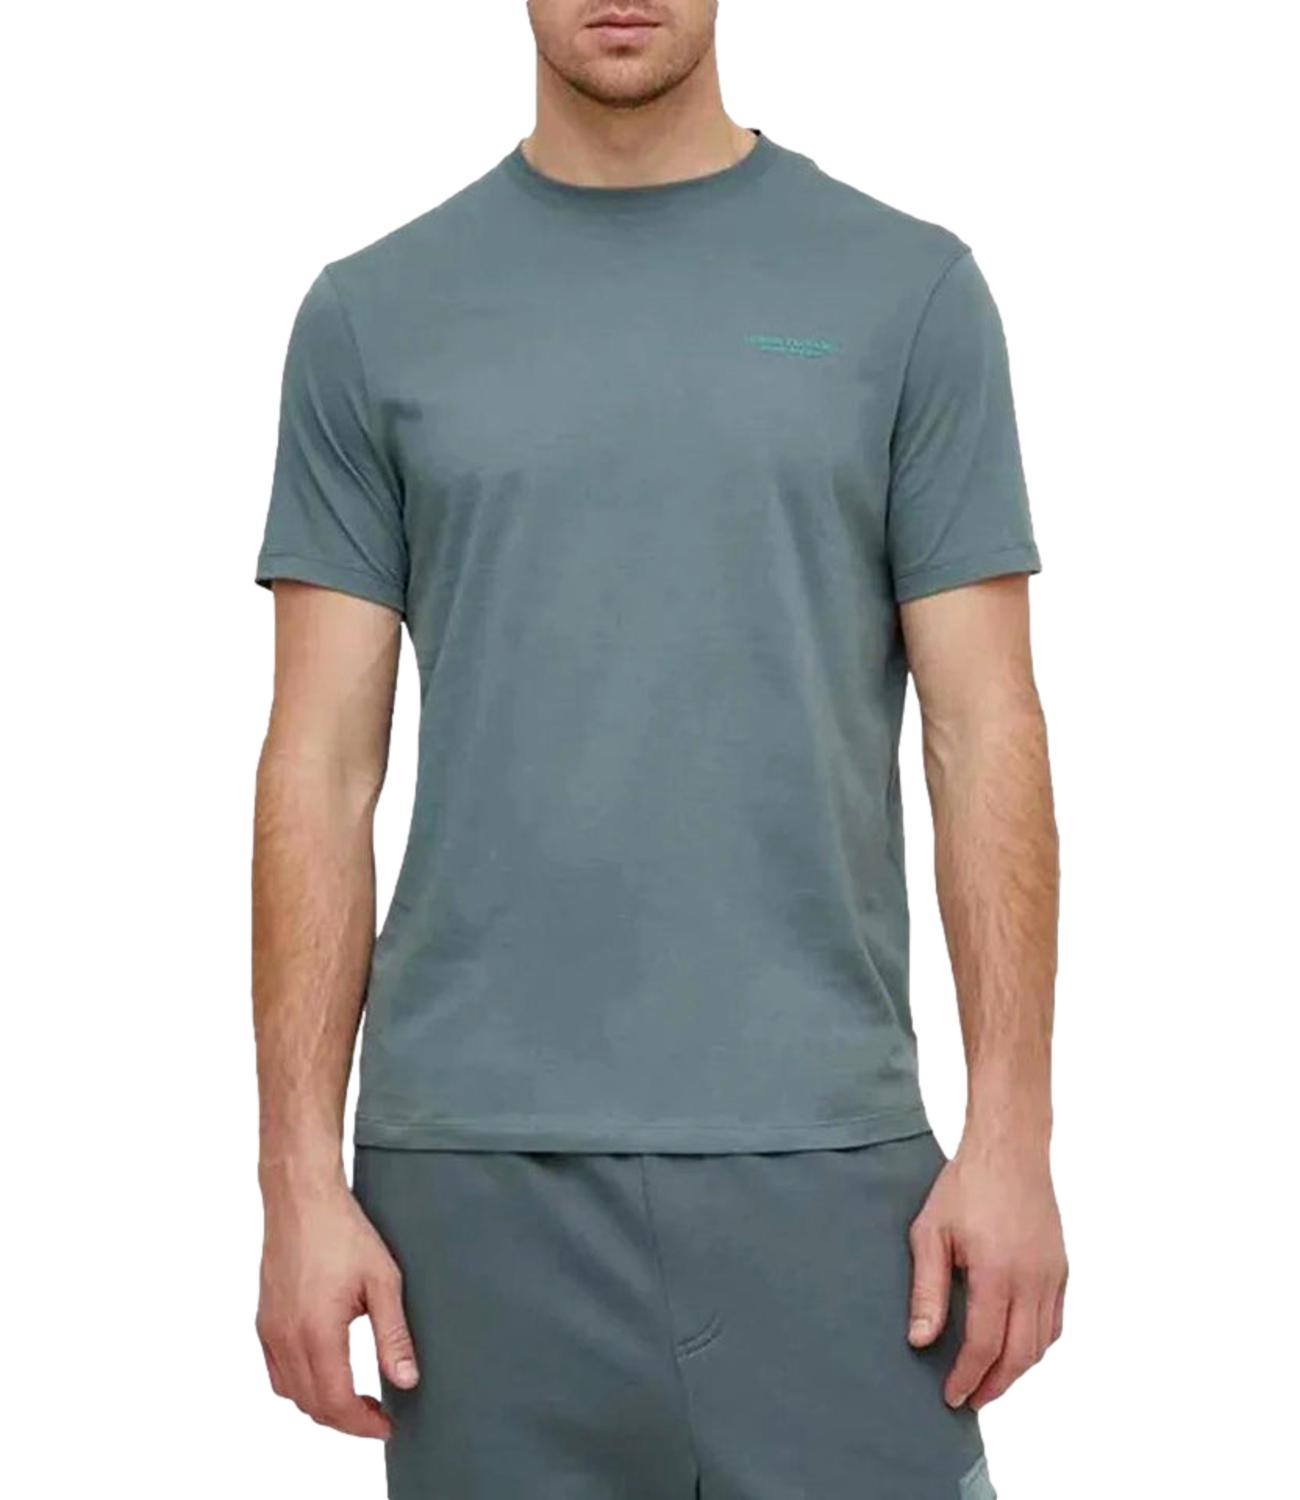 T-shirt Armani Exchange verde militare